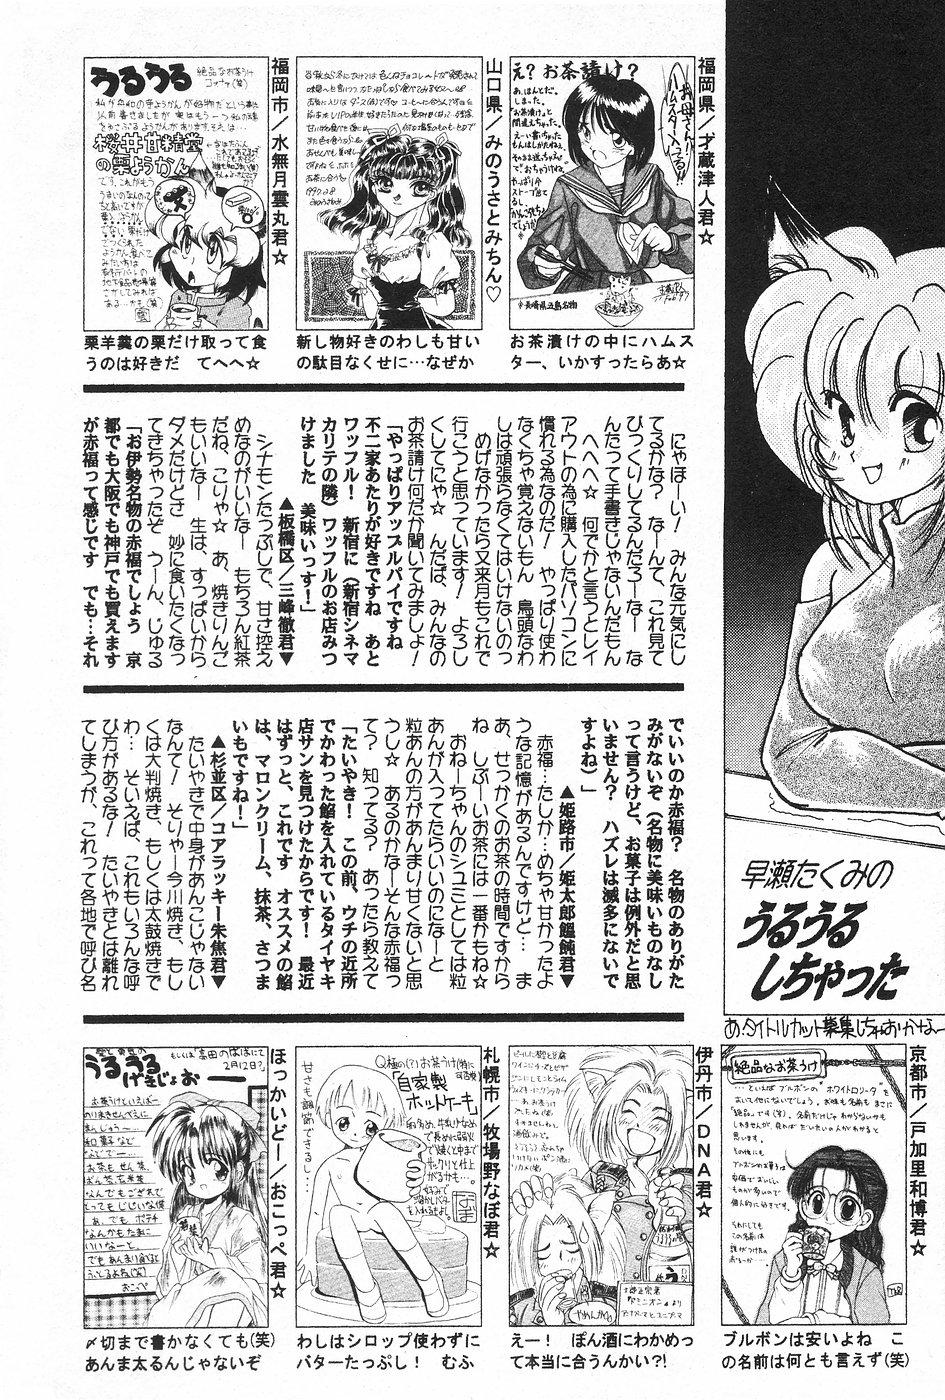 Manga Hotmilk 1997-04 98